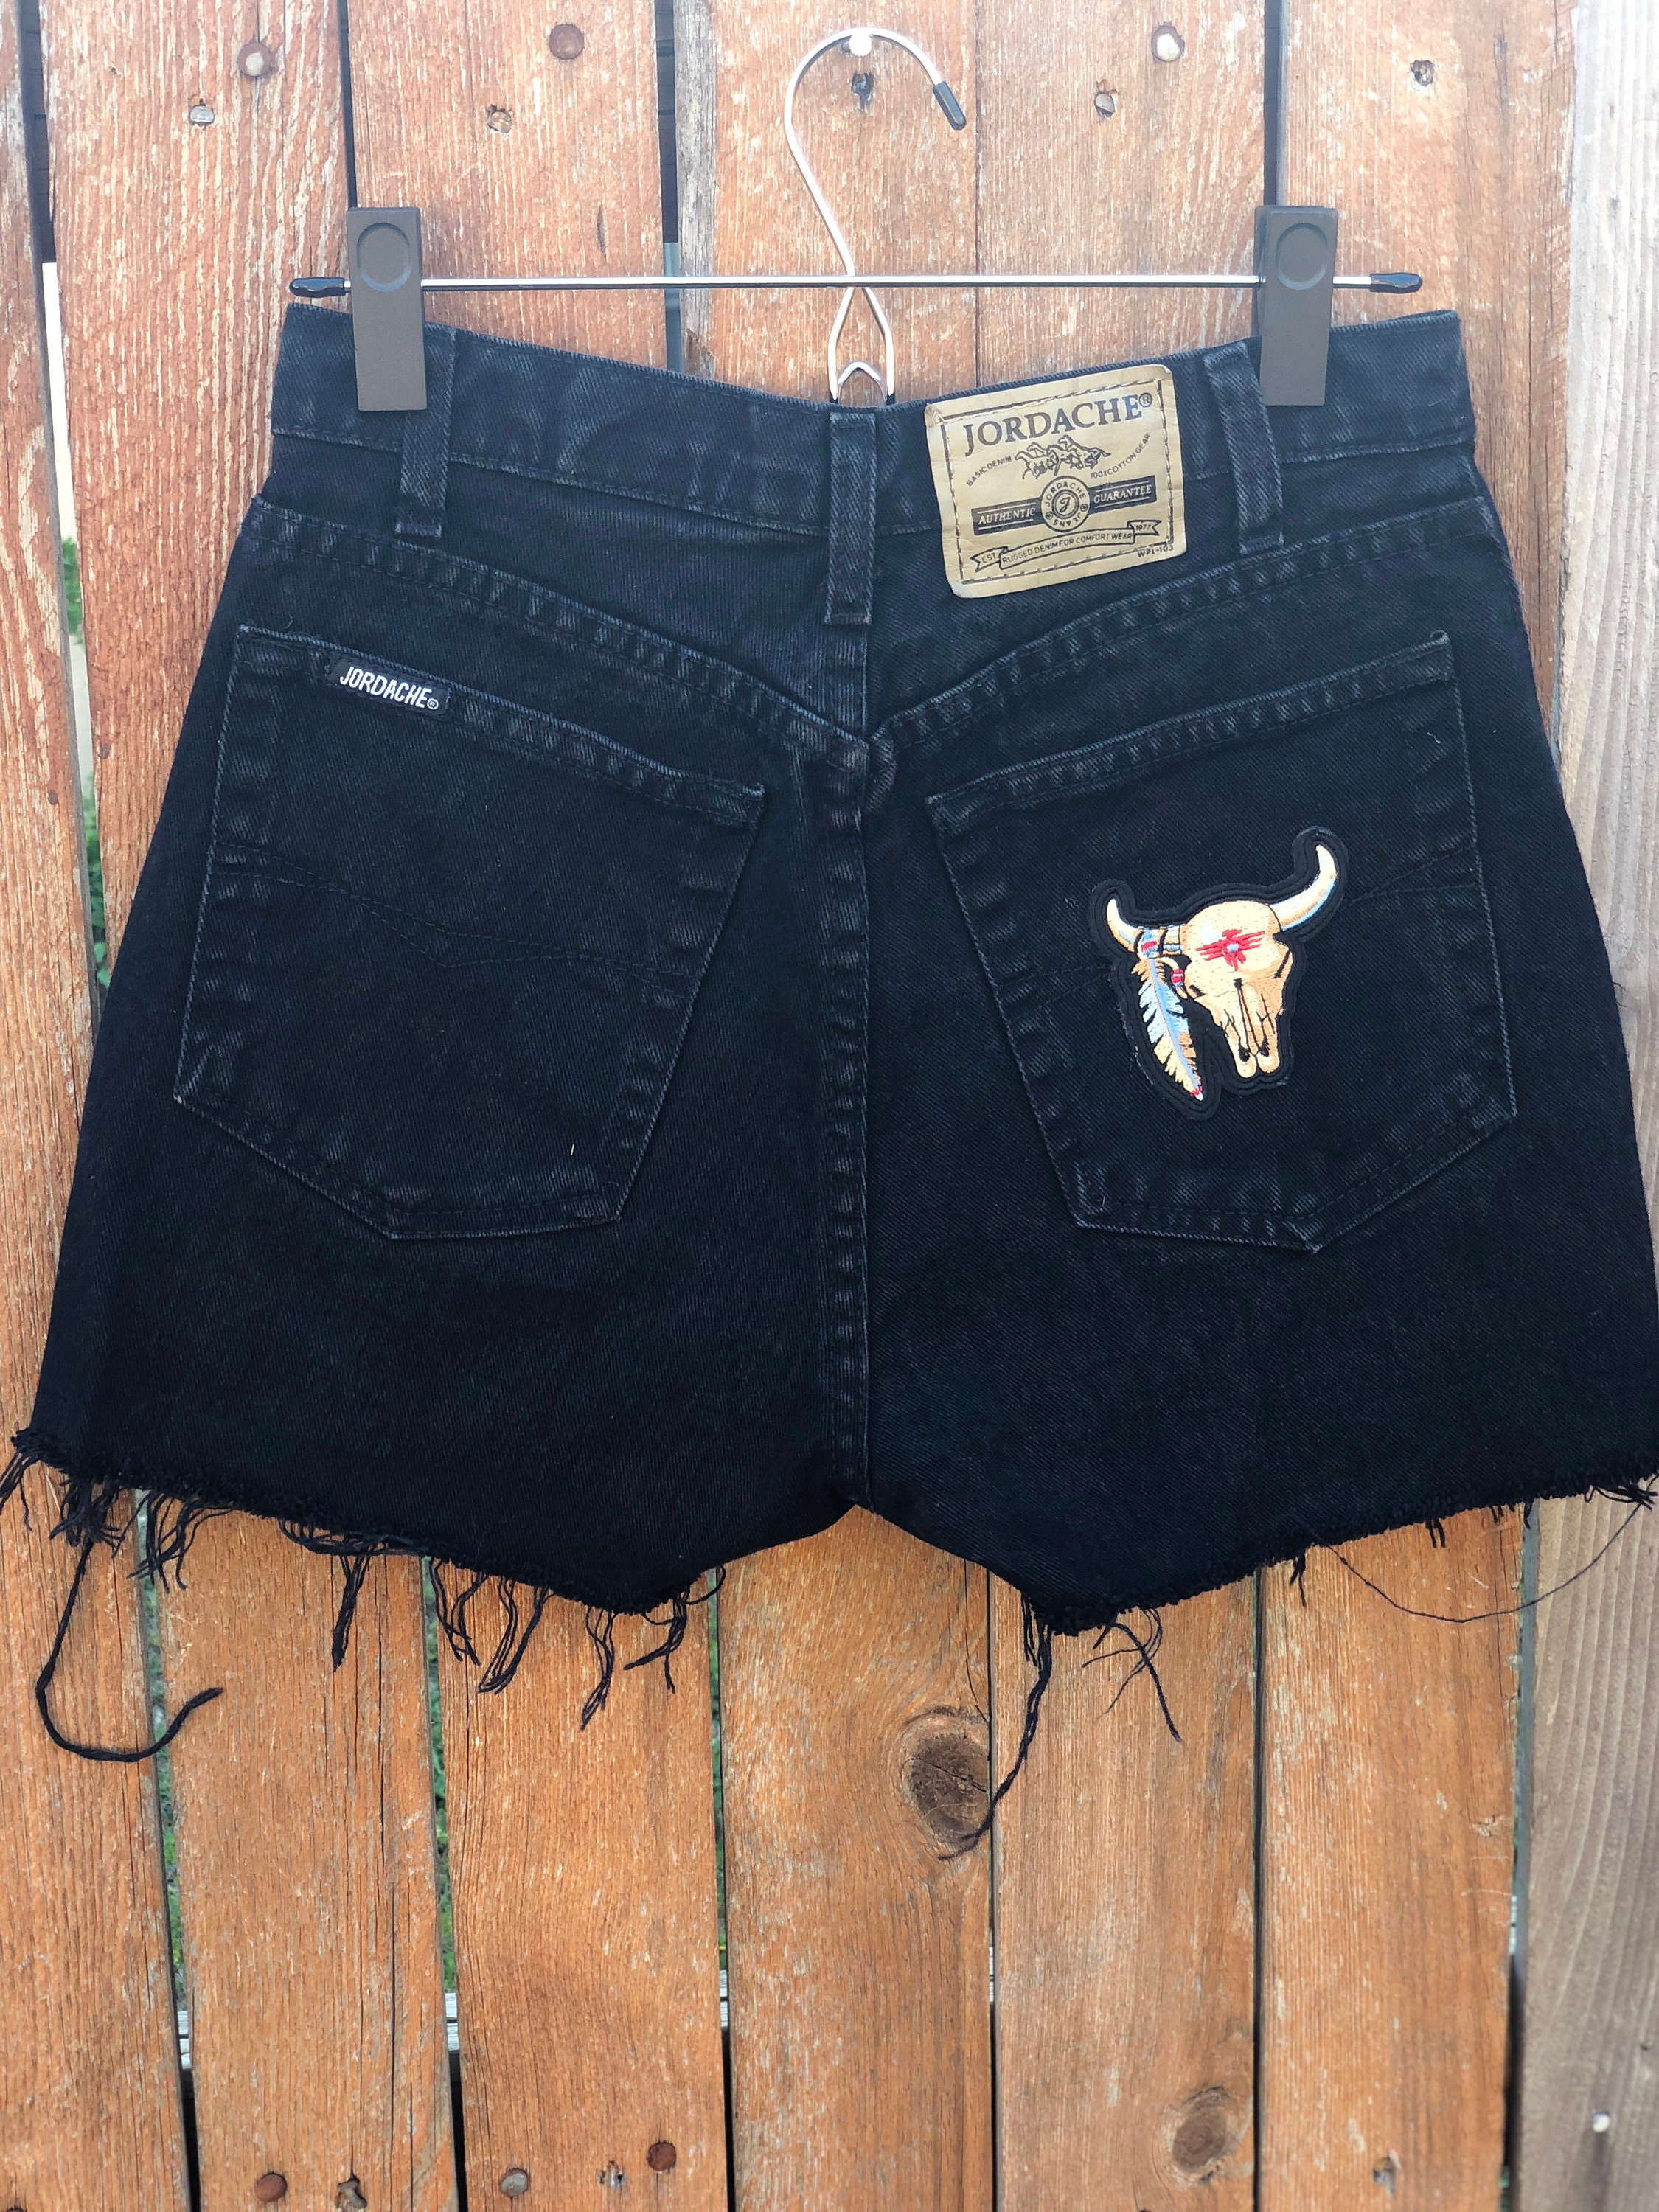 Vintage Jordache Cut off Black Denim High Waisted Shorts Size - Etsy